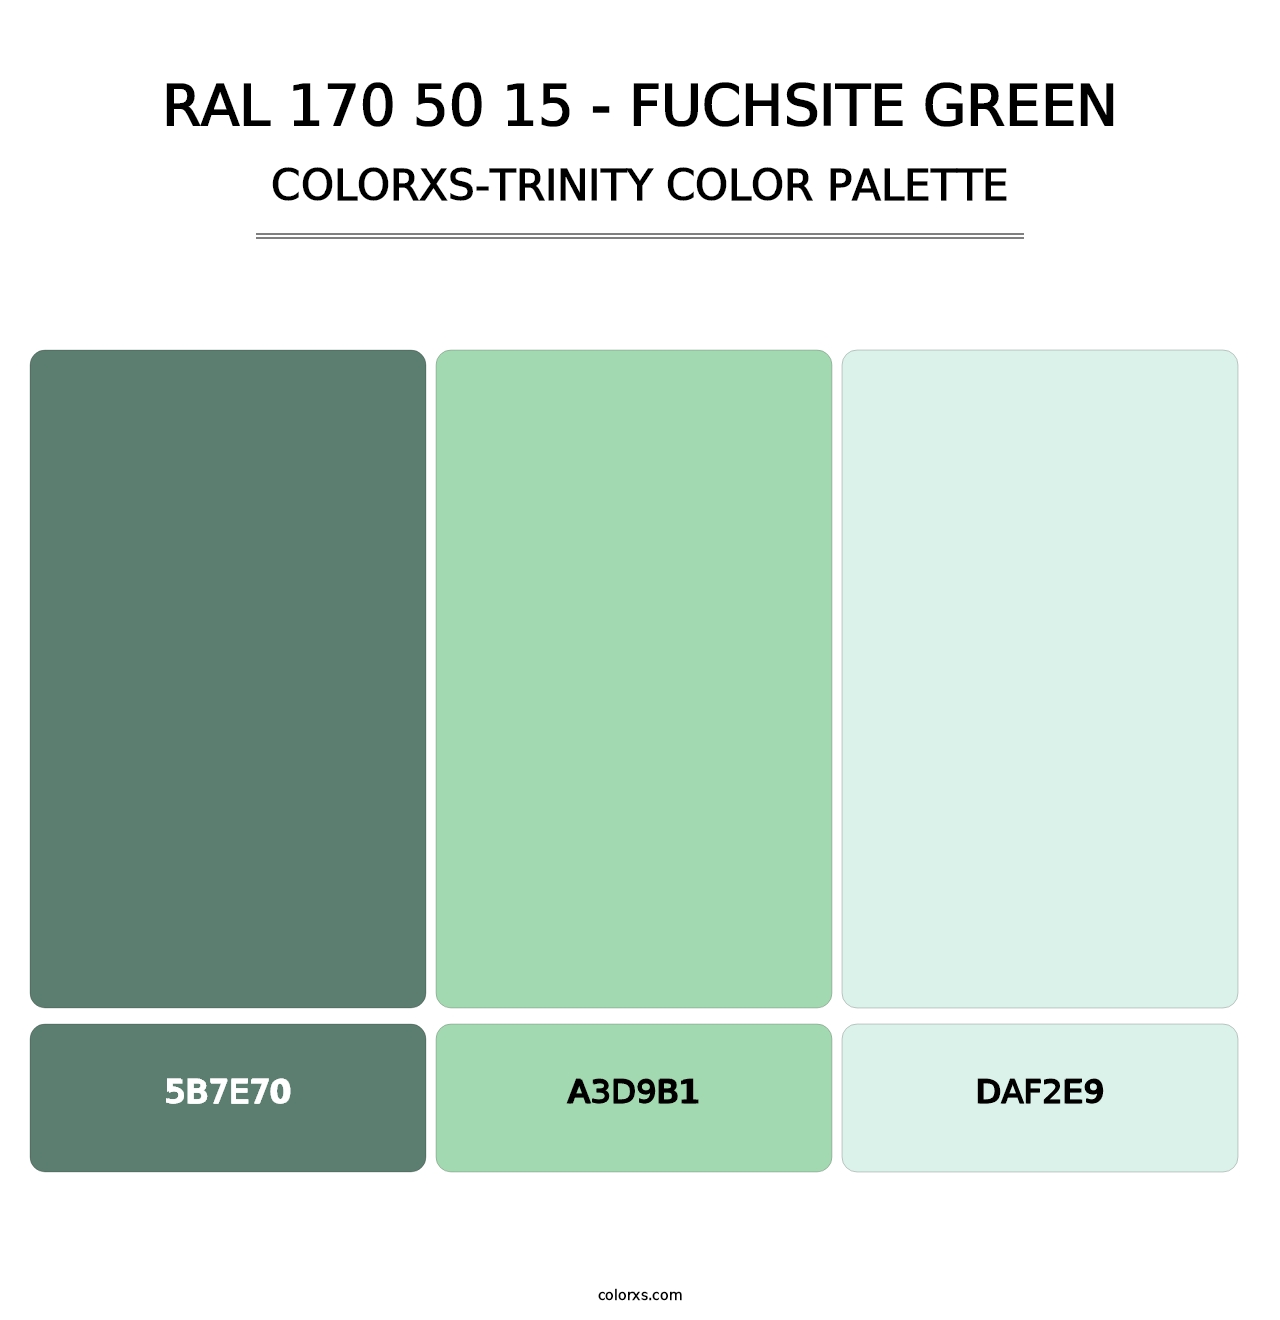 RAL 170 50 15 - Fuchsite Green - Colorxs Trinity Palette